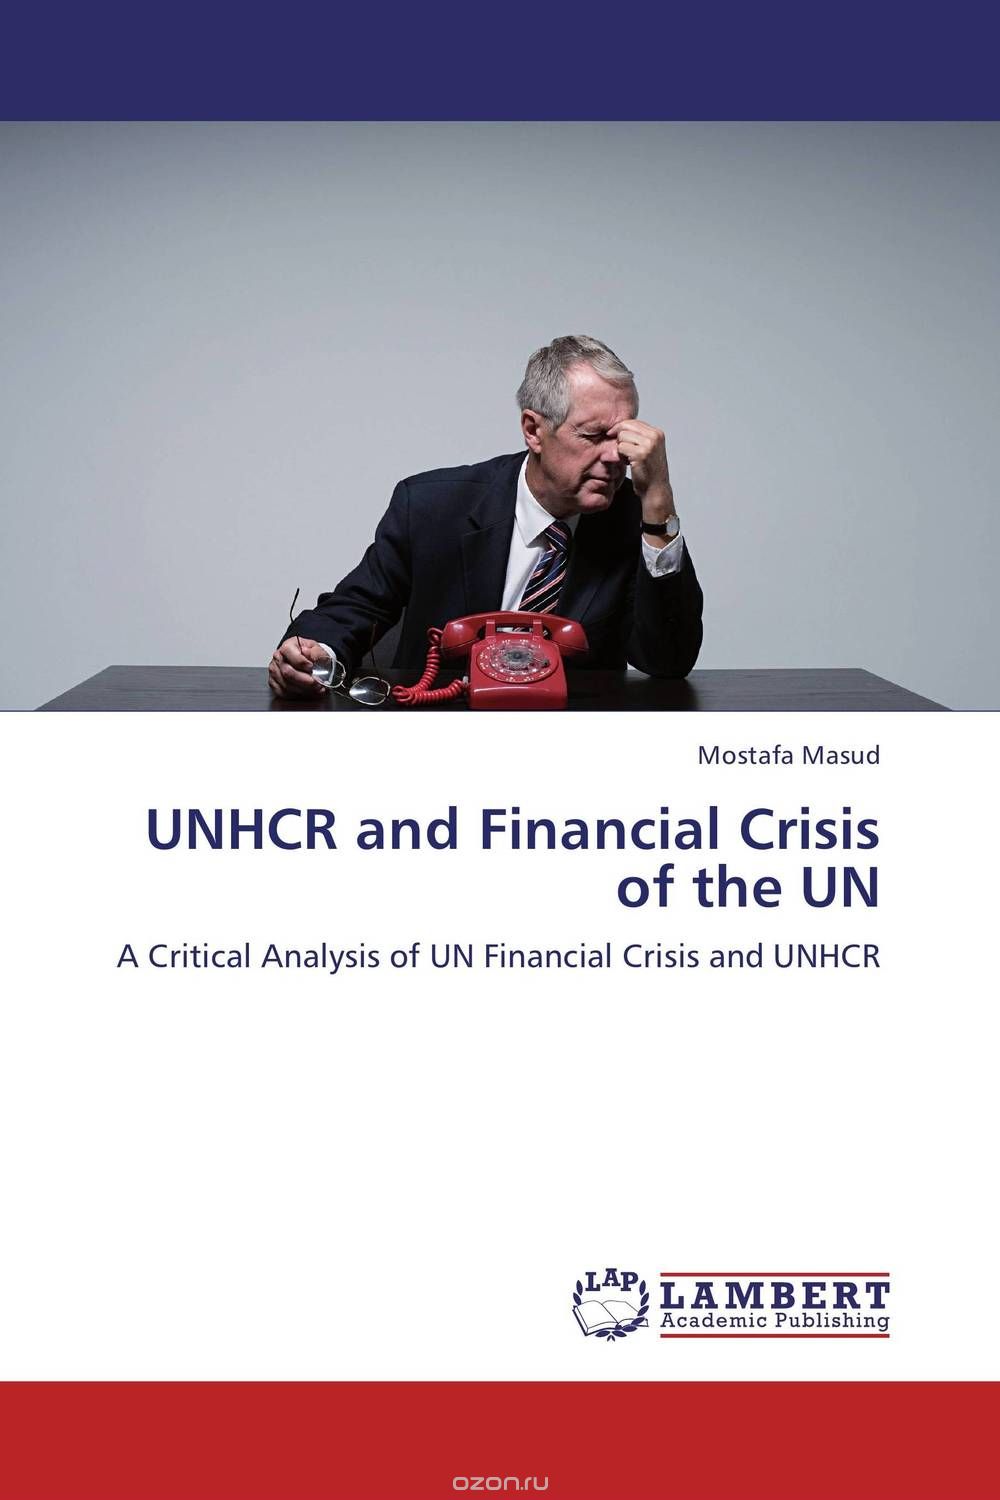 Скачать книгу "UNHCR and Financial Crisis of the UN"